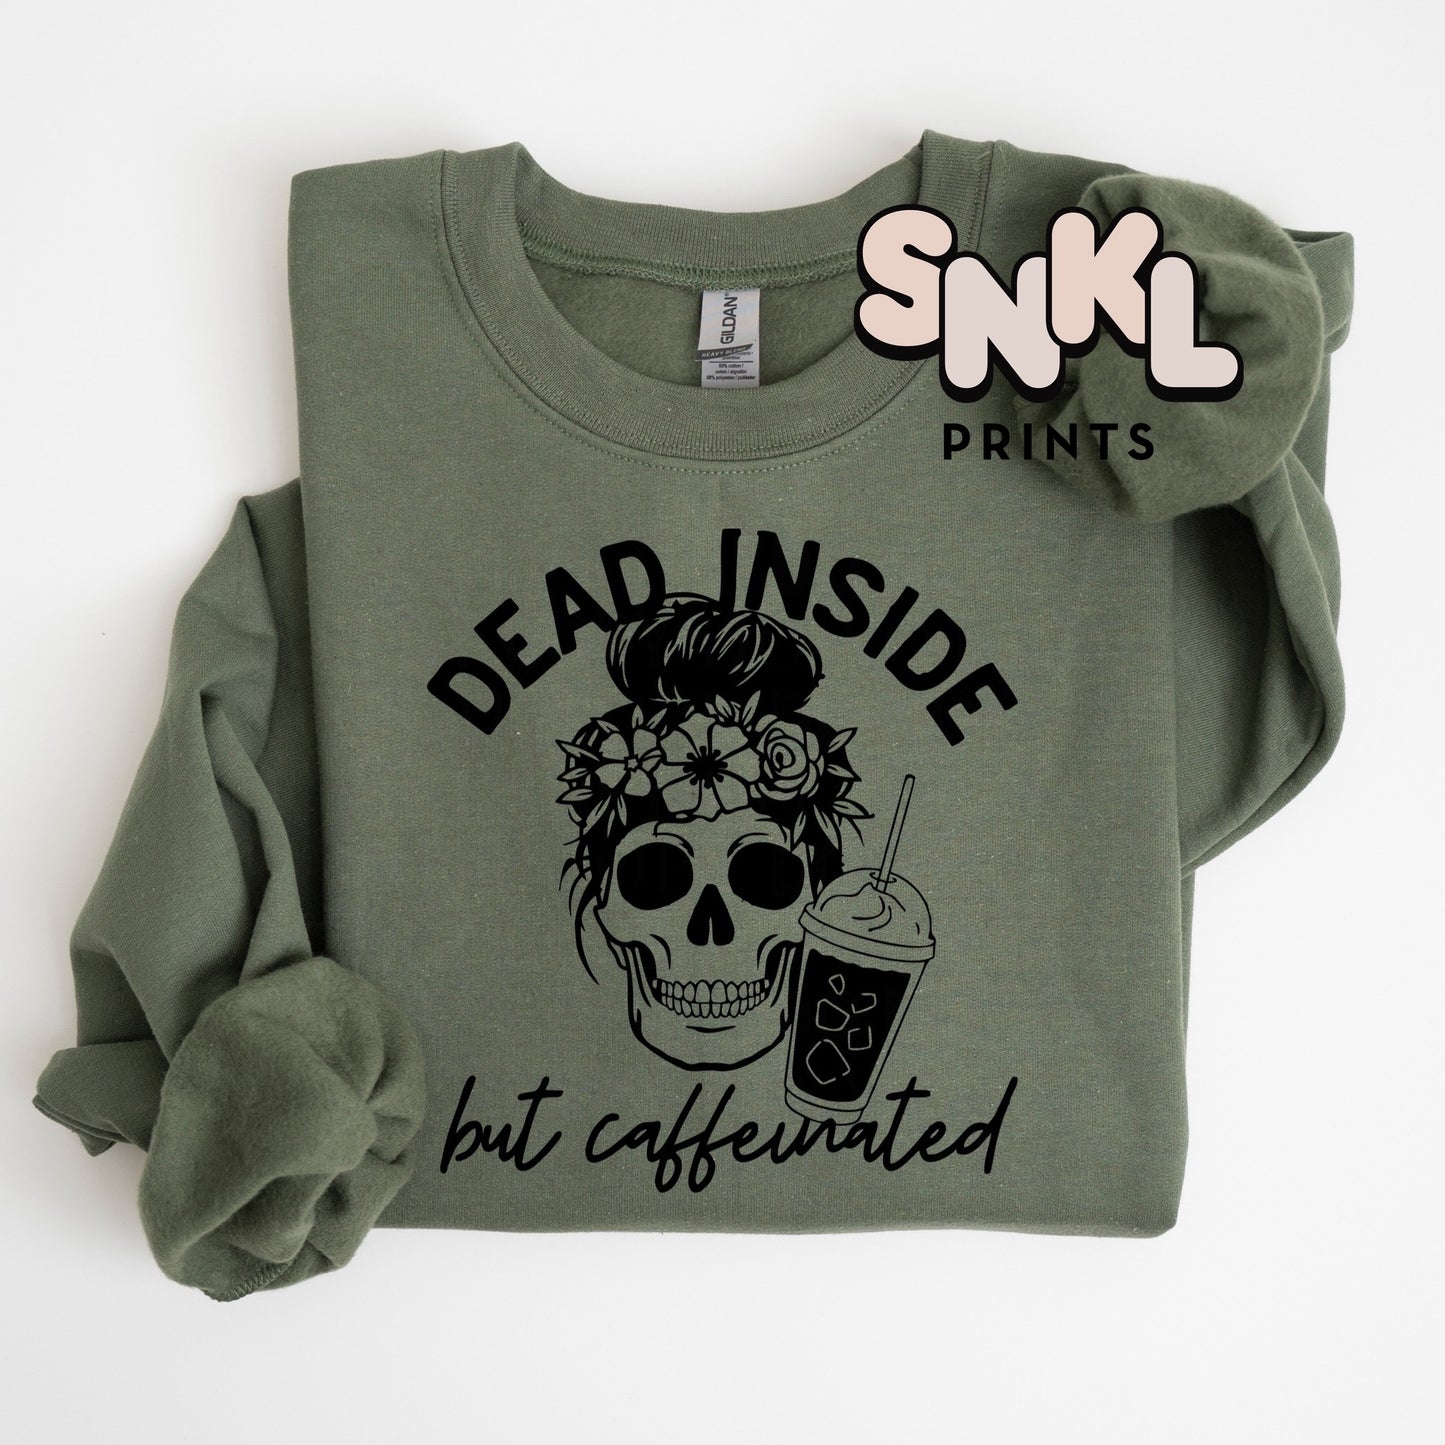 Dead Inside Skeleton Graphic Tee - SNKL Prints